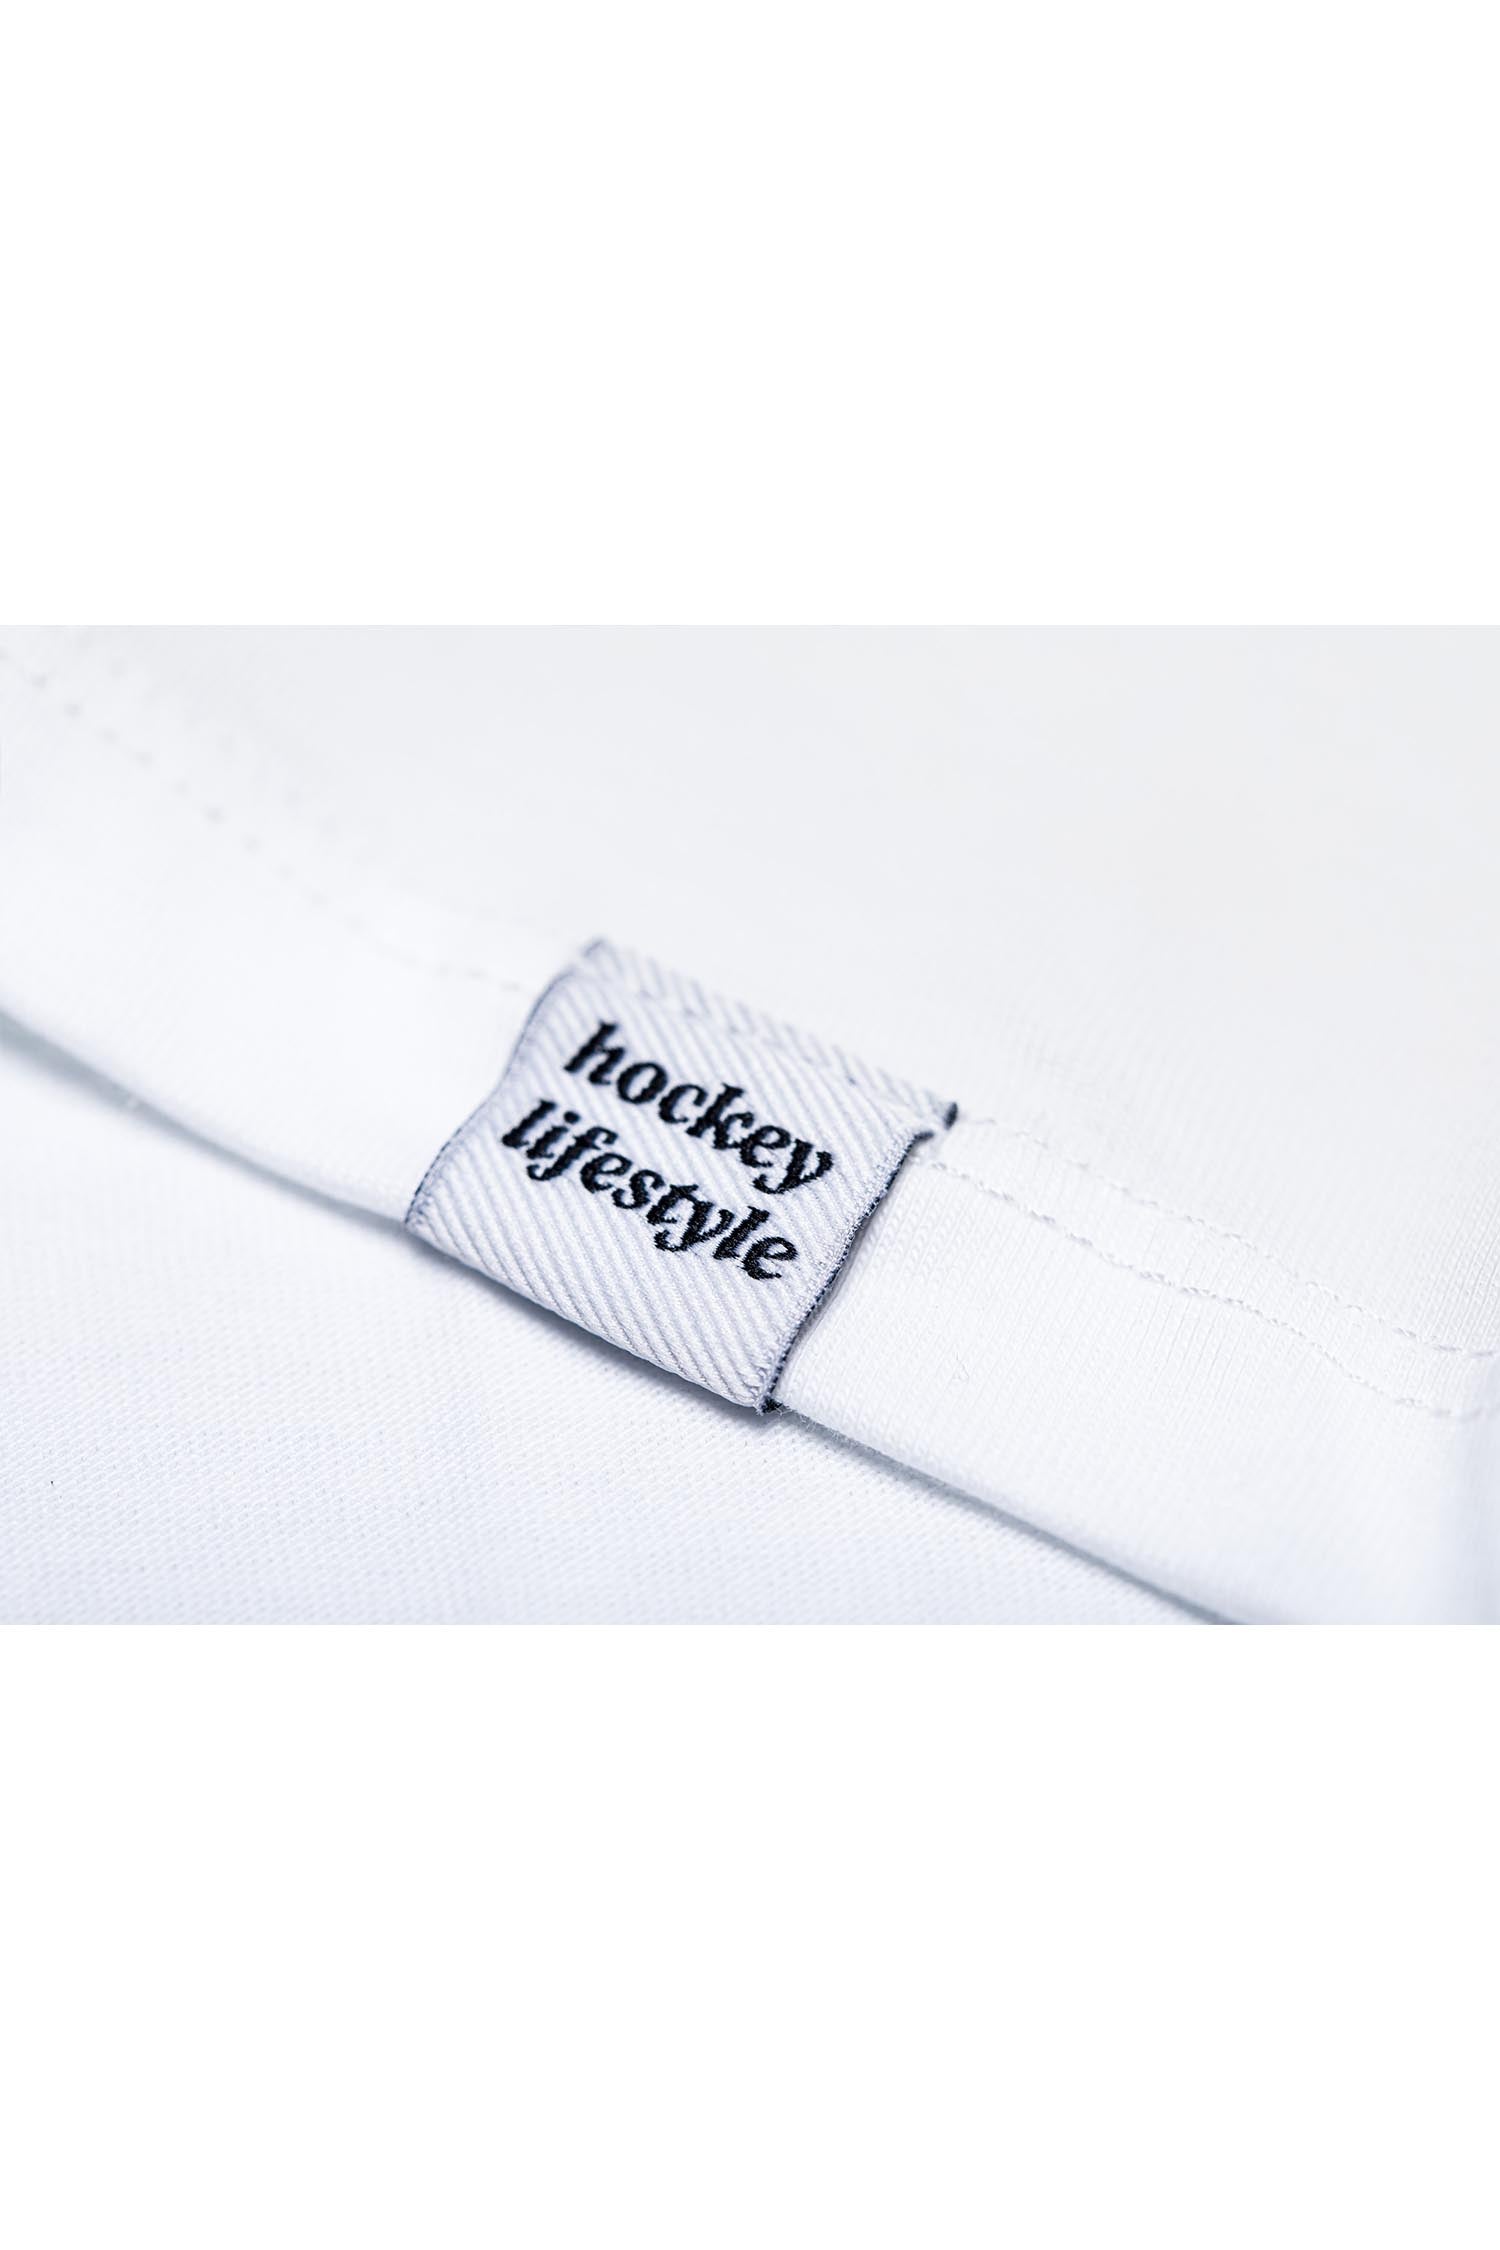 T-shirt Urban Life unisex - White